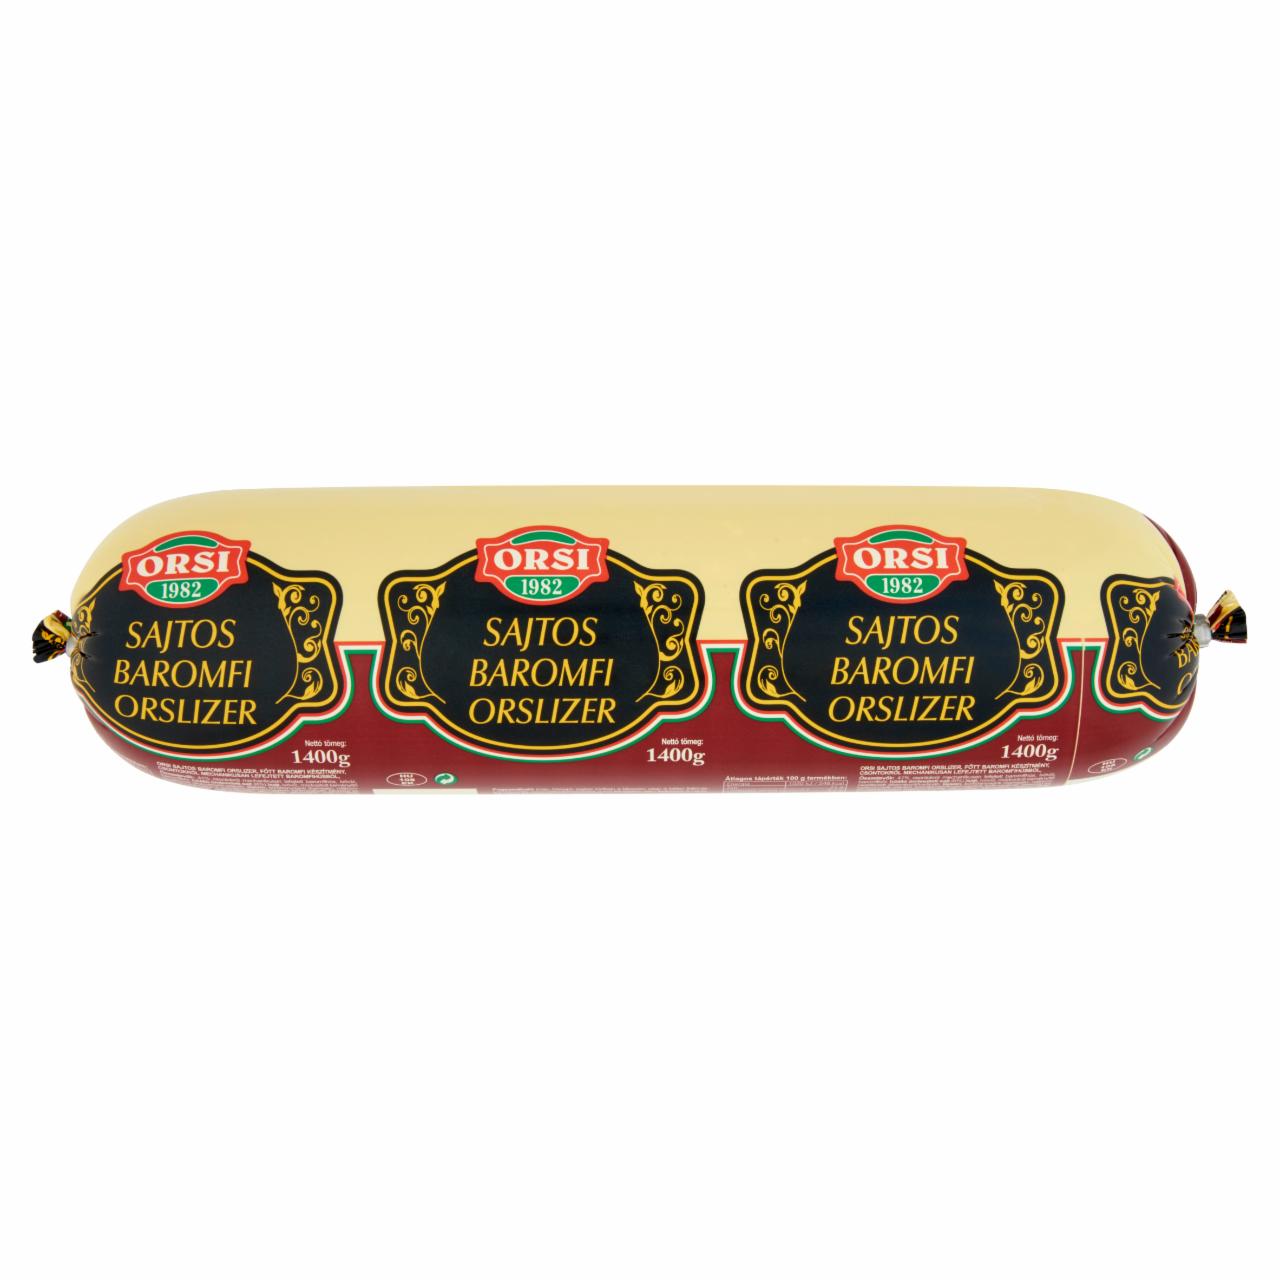 Képek - Orsi sajtos baromfi orslizer 1400 g